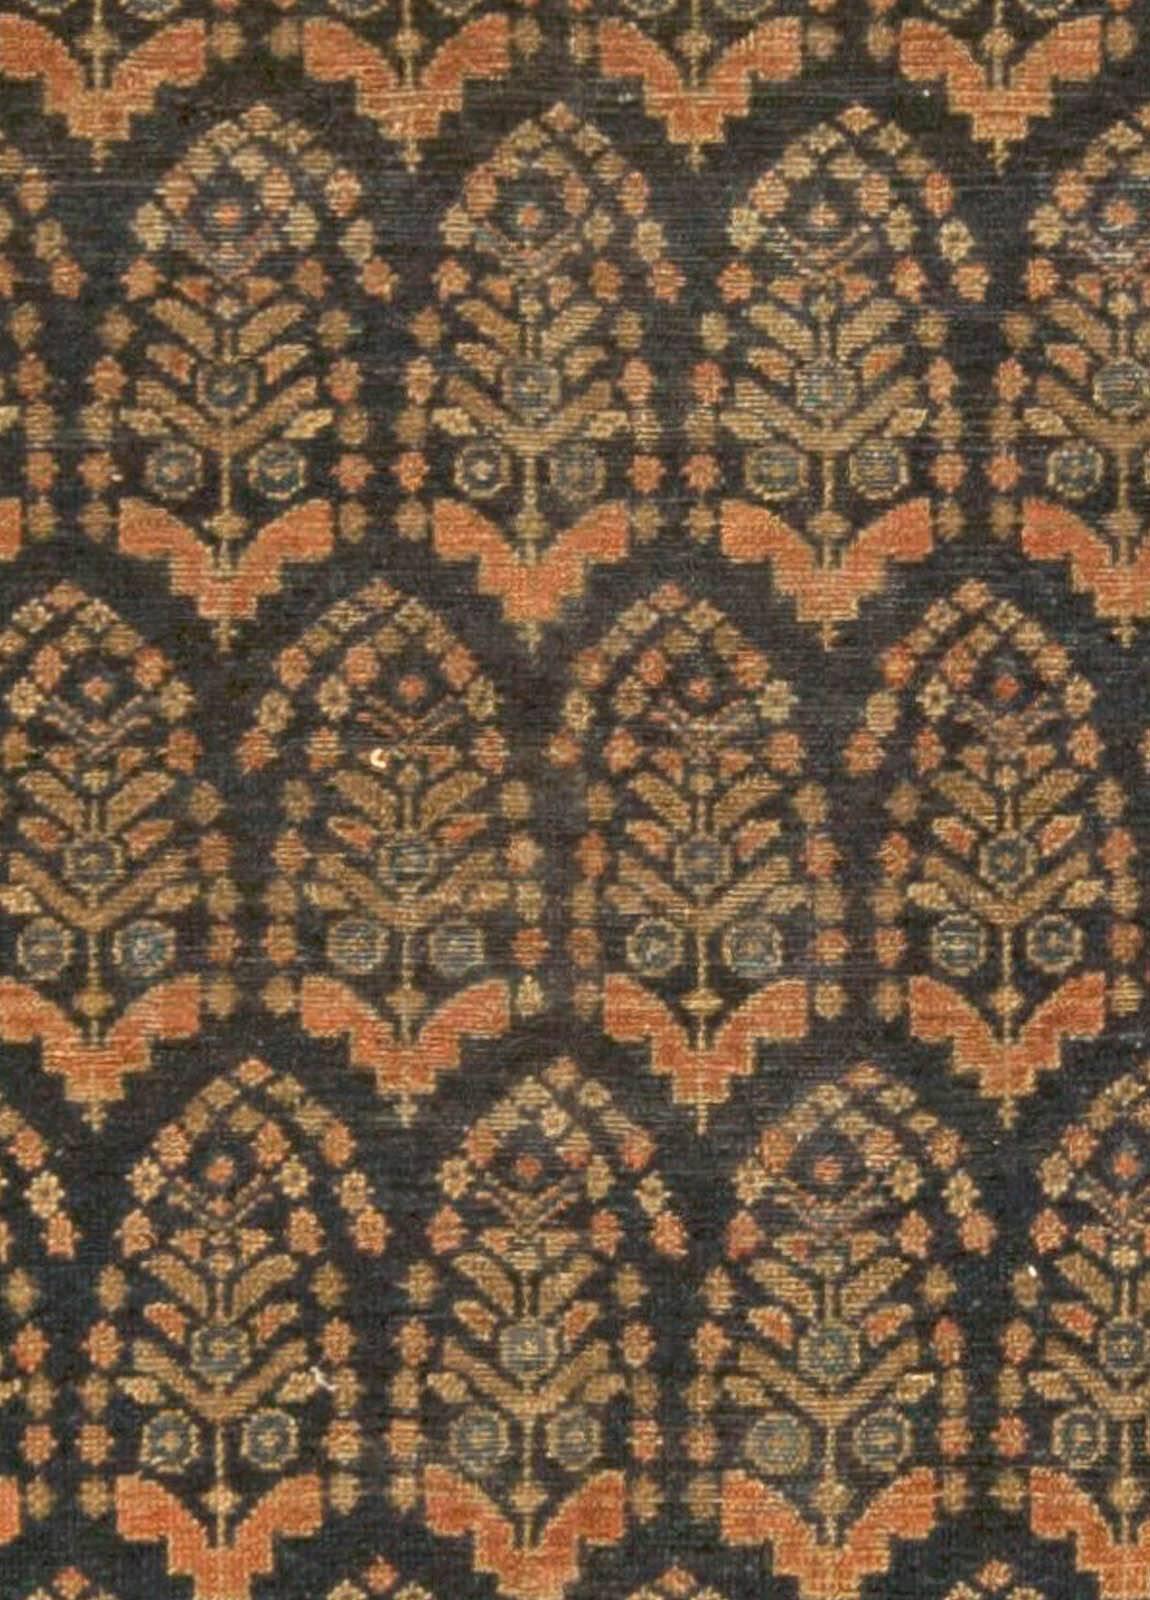 Antique Persian Malayer Orange Handwoven Wool Rug
Size: 6'0